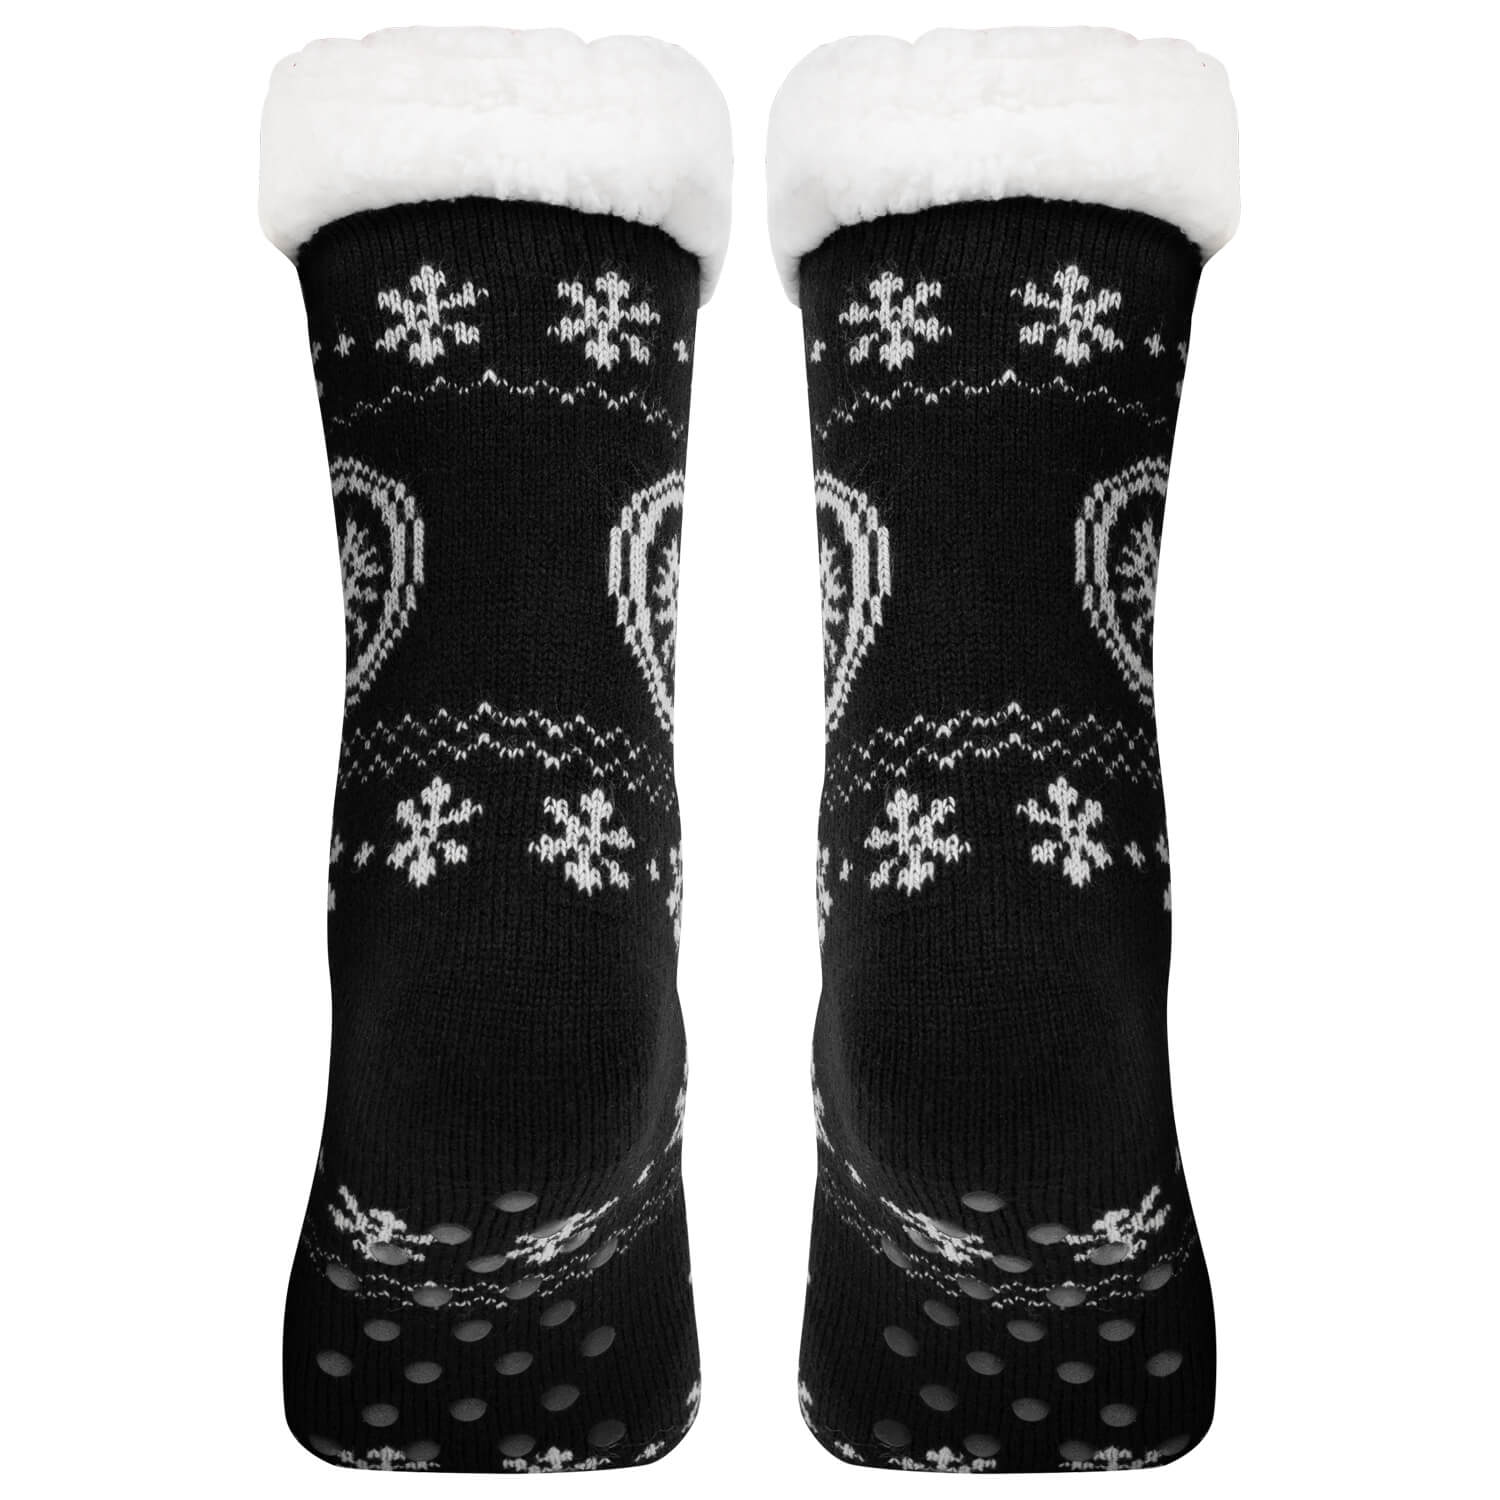 Bild 4: Slipper Socks Black/White 